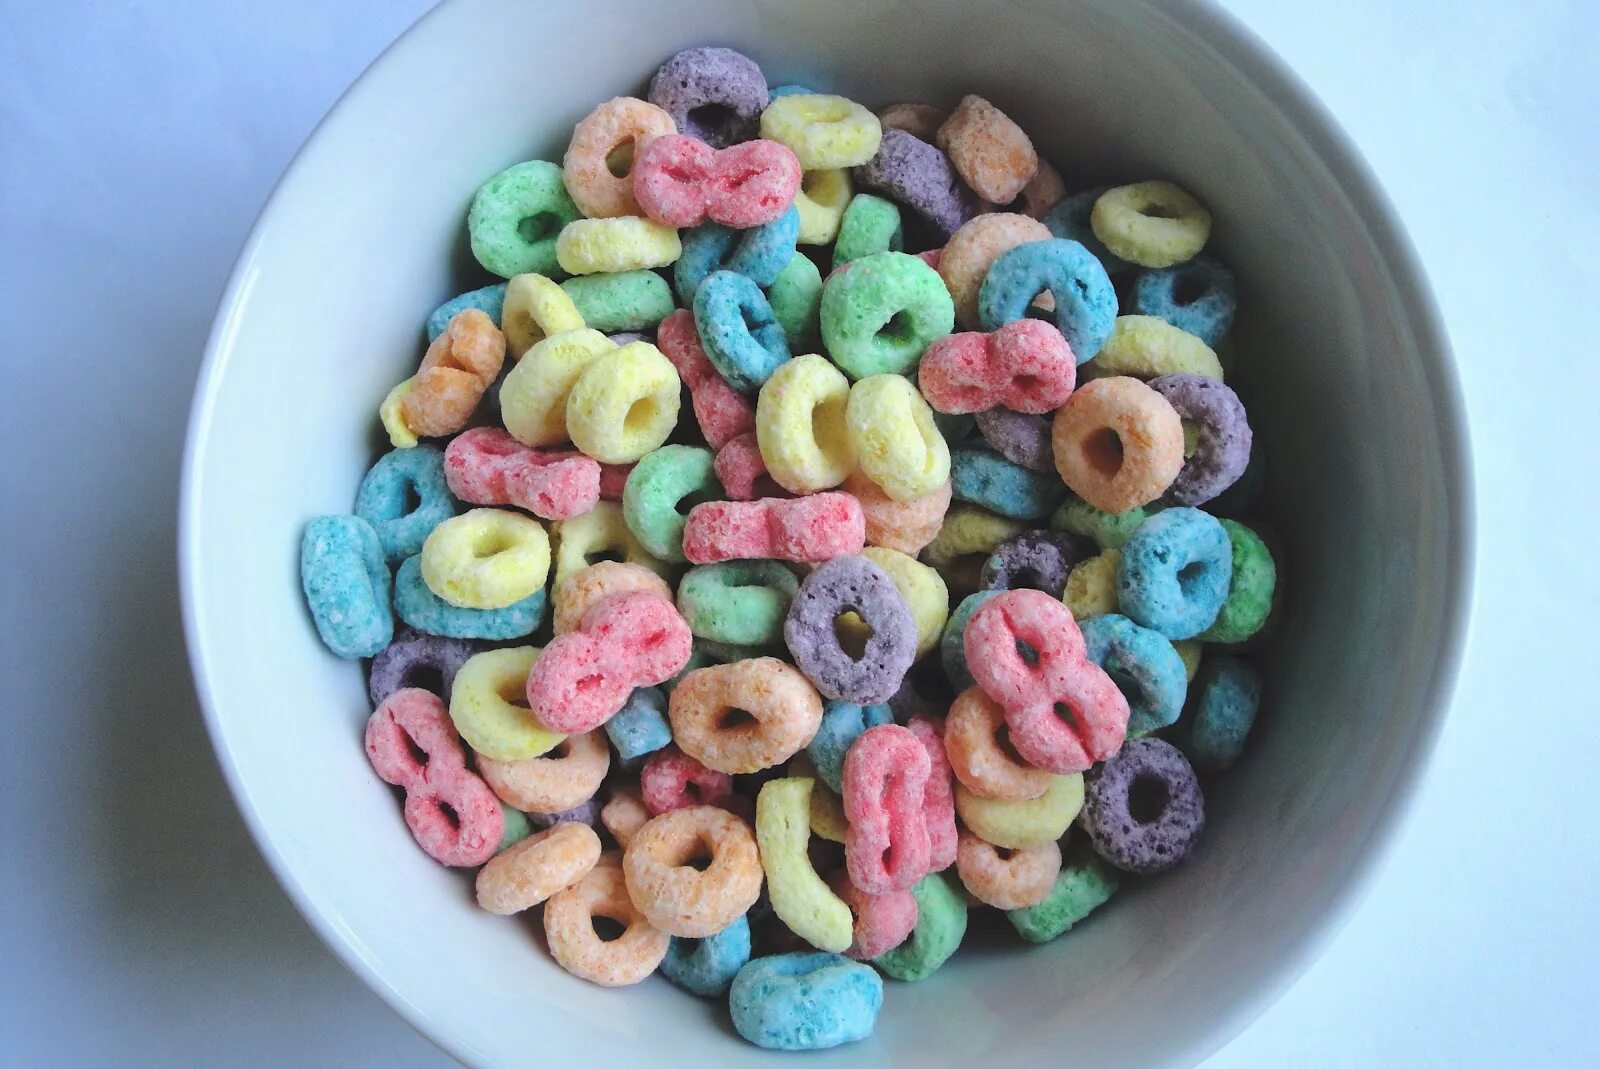 Froot loops Cereal. Froot loops (цветные хлопья-Колечки). Хлопья Froot loops. Разноцветный сухой завтрак. Froot loops